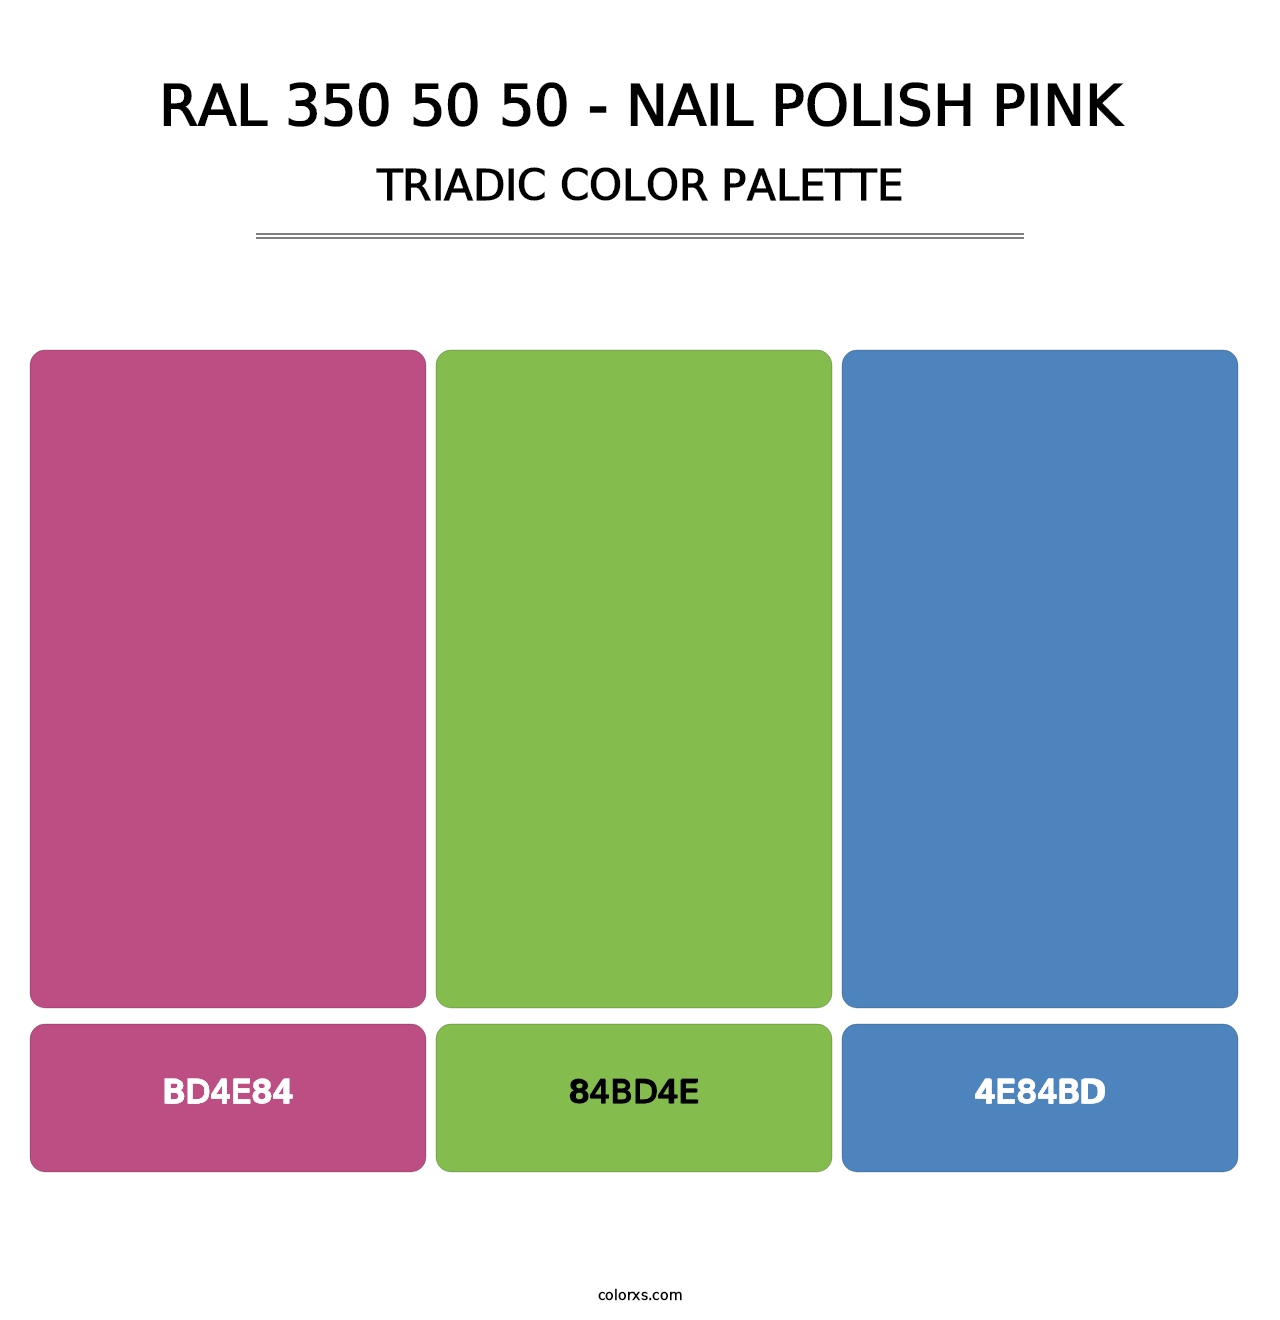 RAL 350 50 50 - Nail Polish Pink - Triadic Color Palette